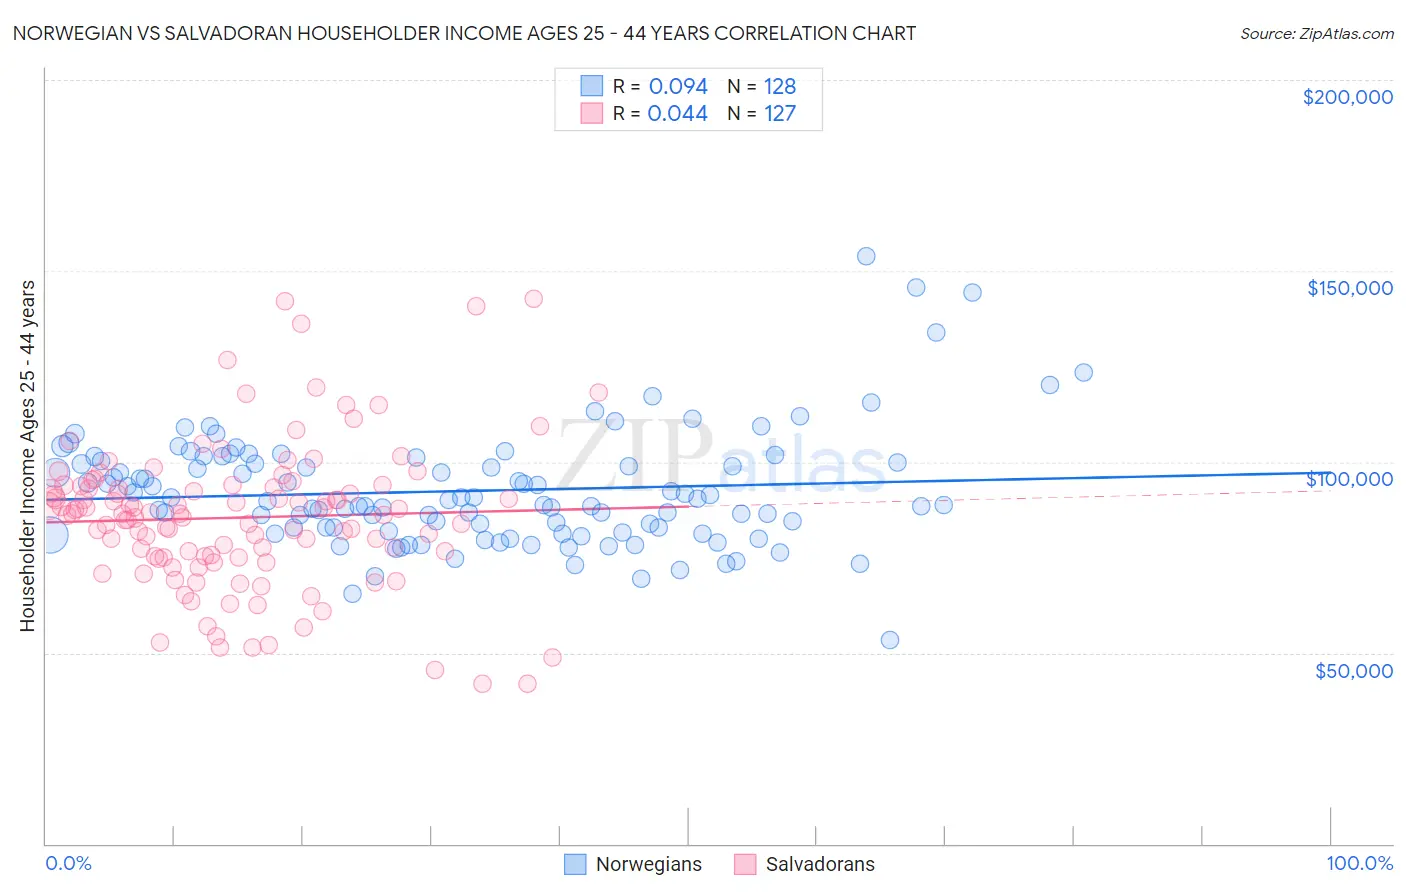 Norwegian vs Salvadoran Householder Income Ages 25 - 44 years